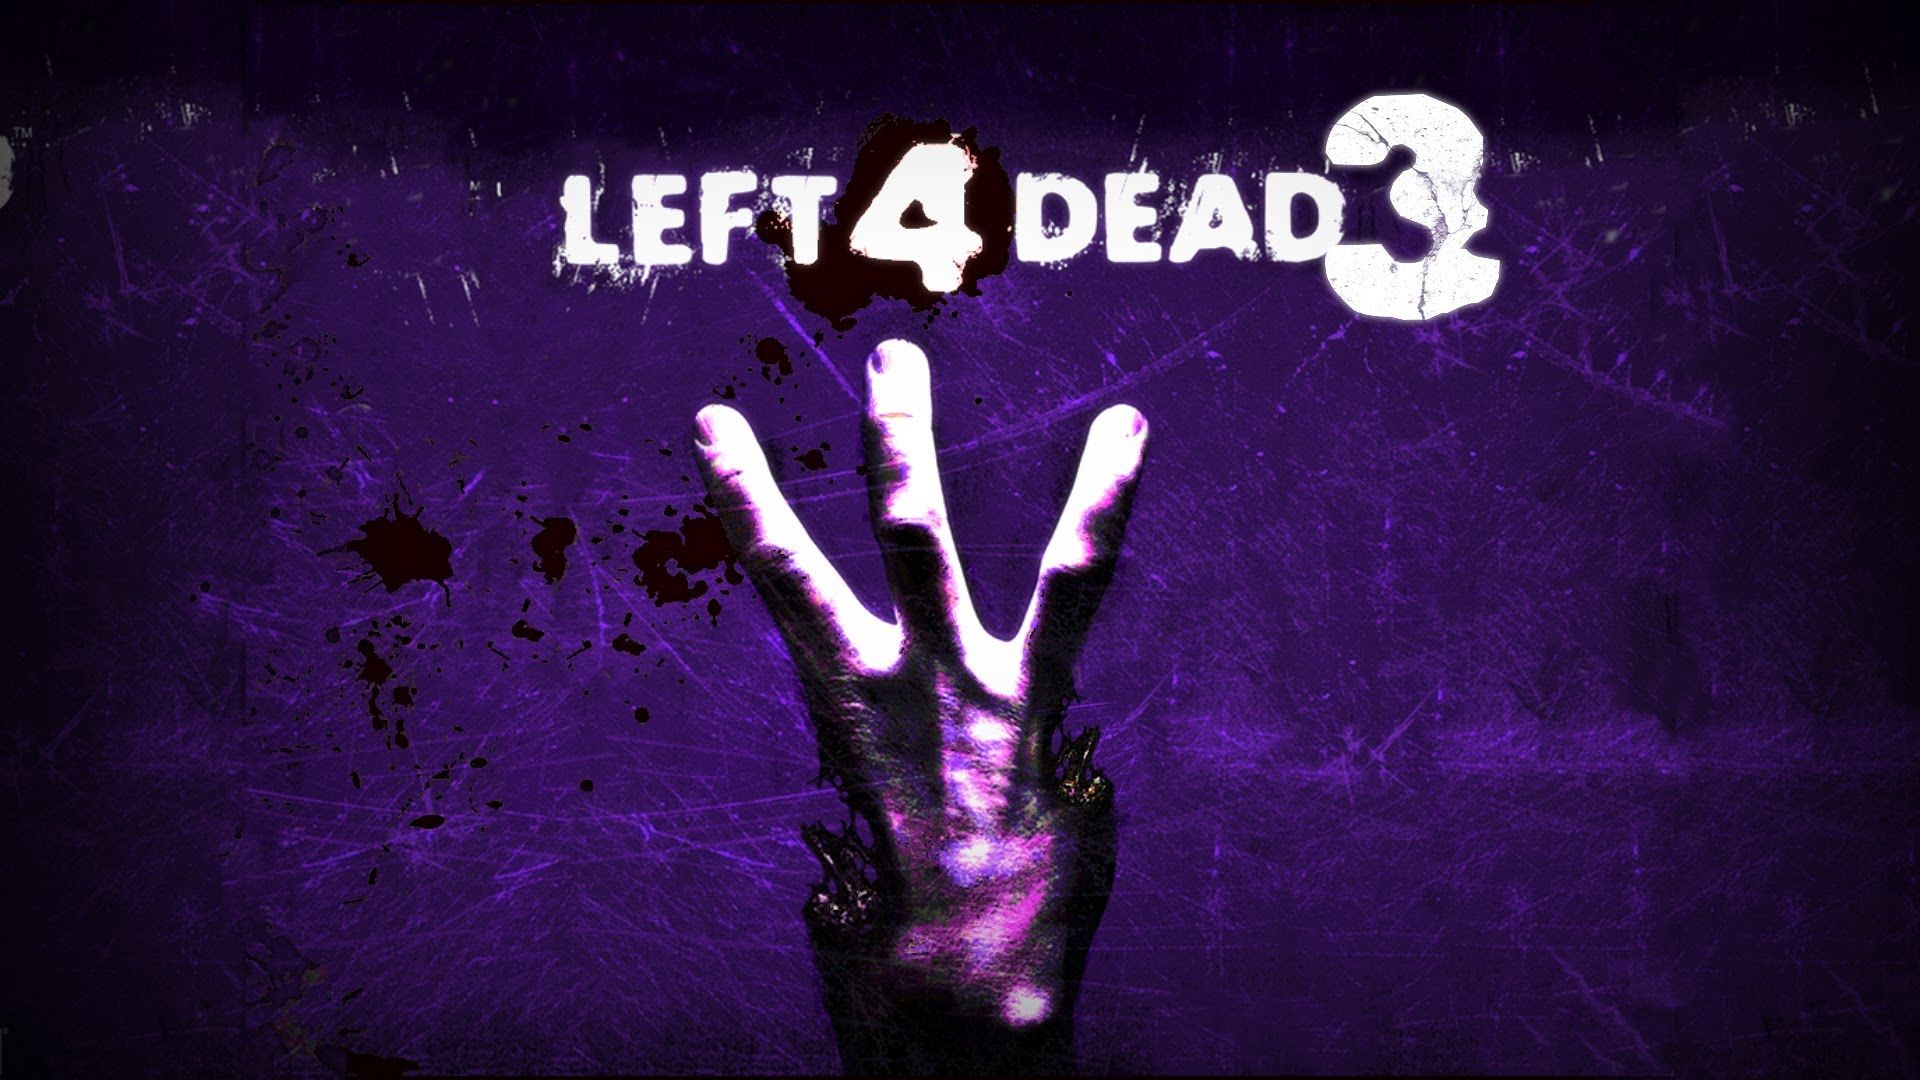 left 4 dead 3 trailer gameplay